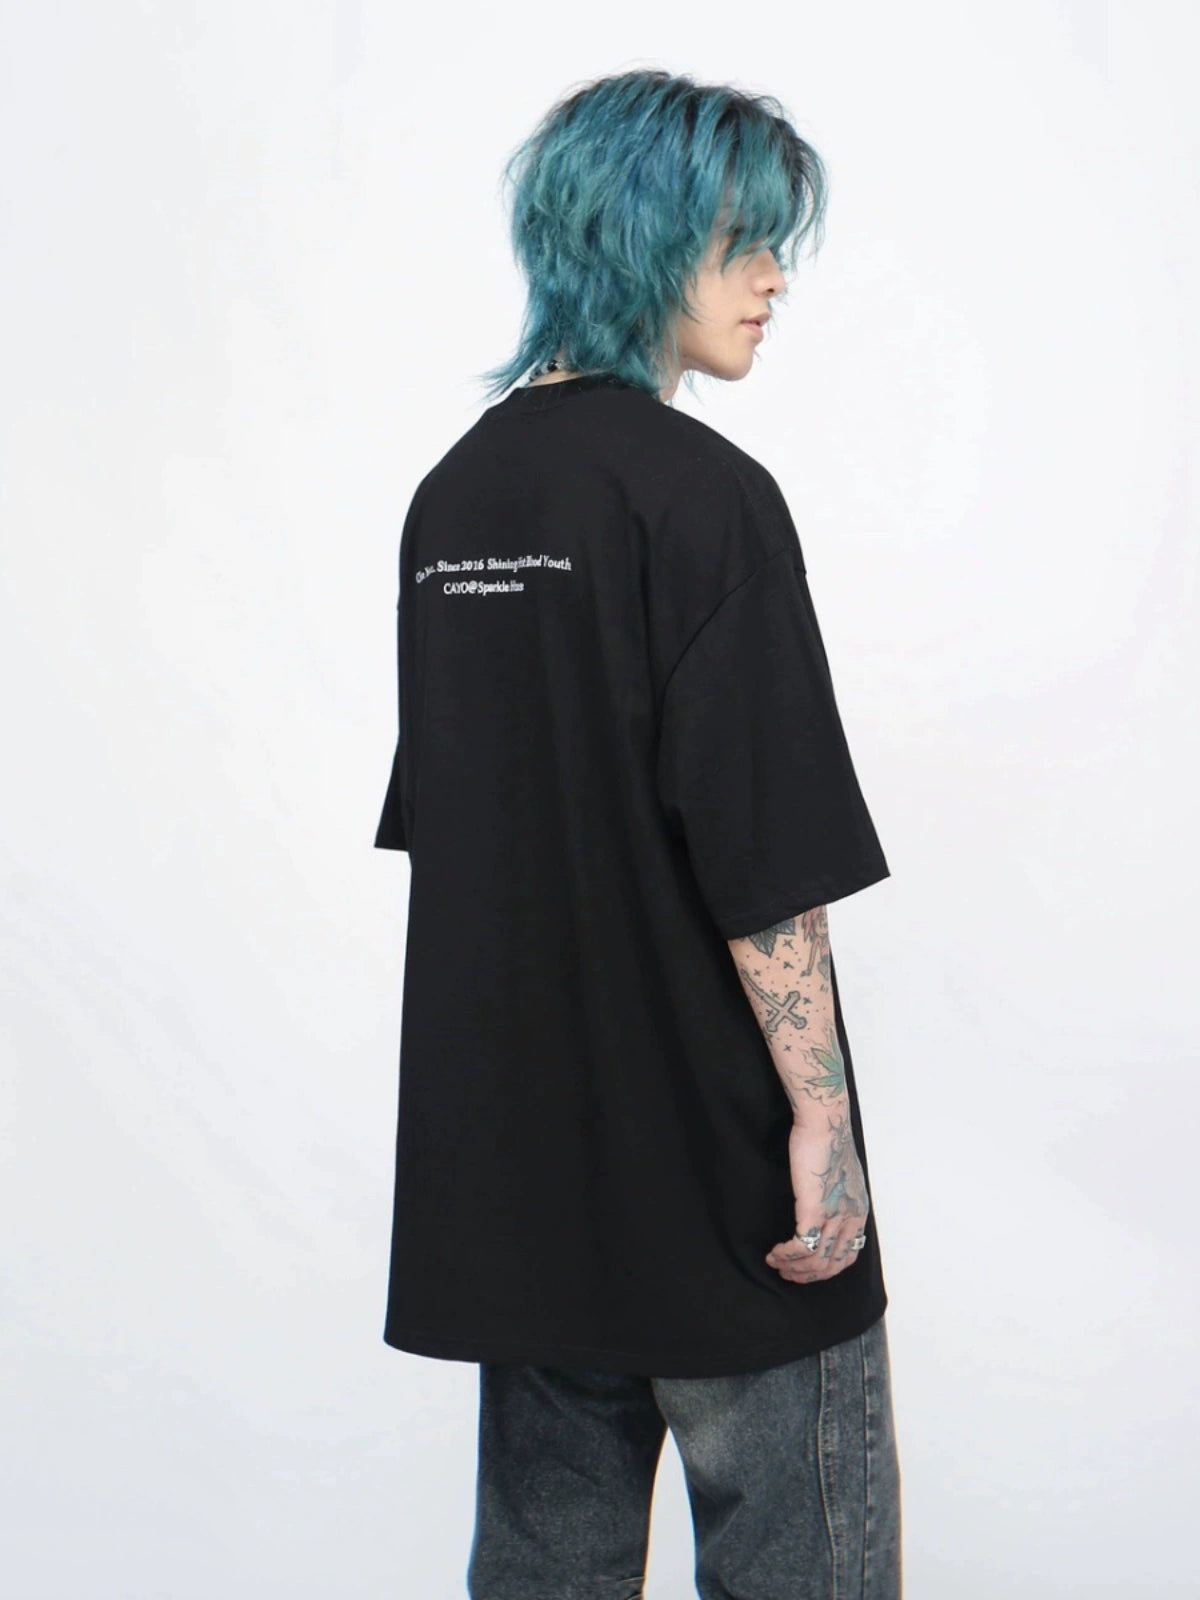 Neckline Embroidery Oversize Short Sleeve T-Shirt WN5842